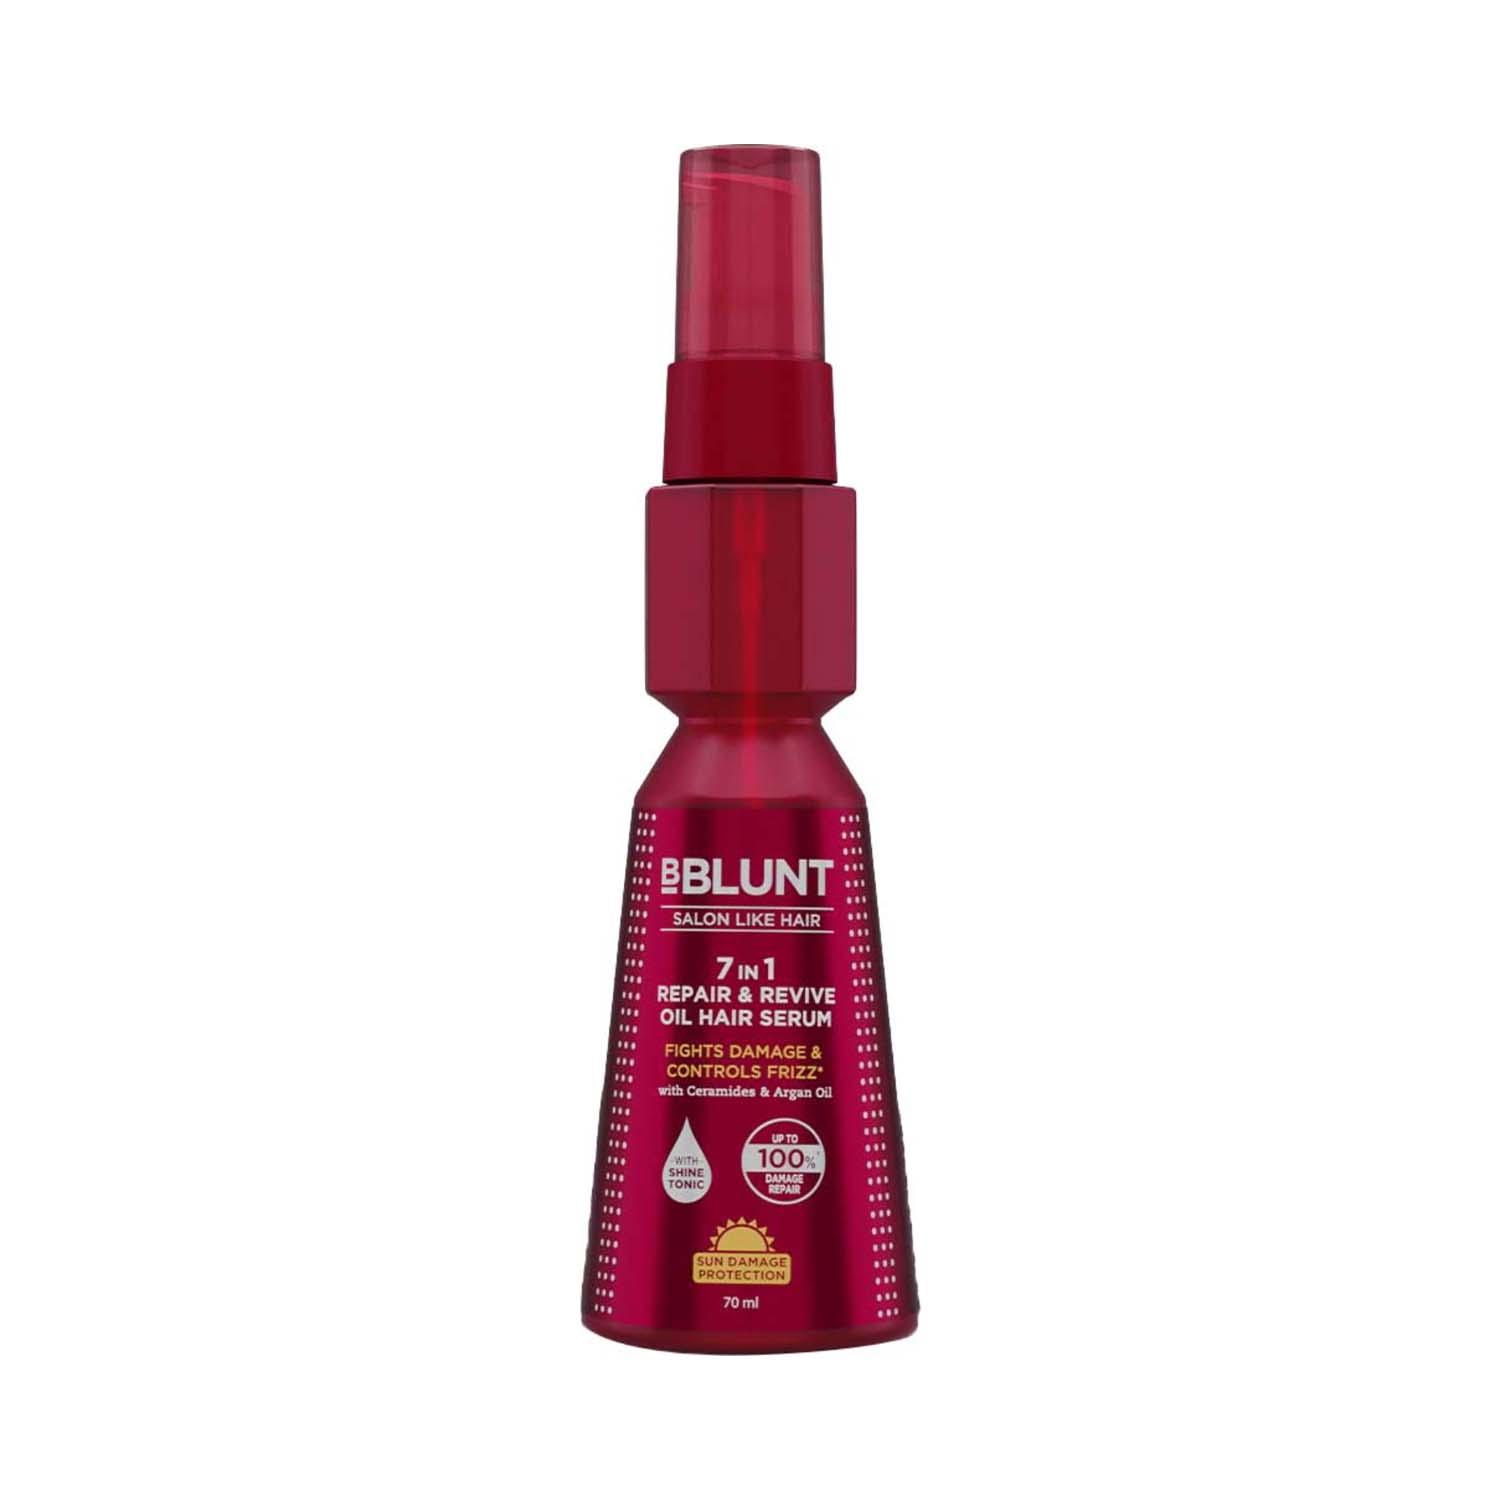 BBlunt | BBlunt 7 in 1 Repair & Revive Oil Hair Serum (70 ml)